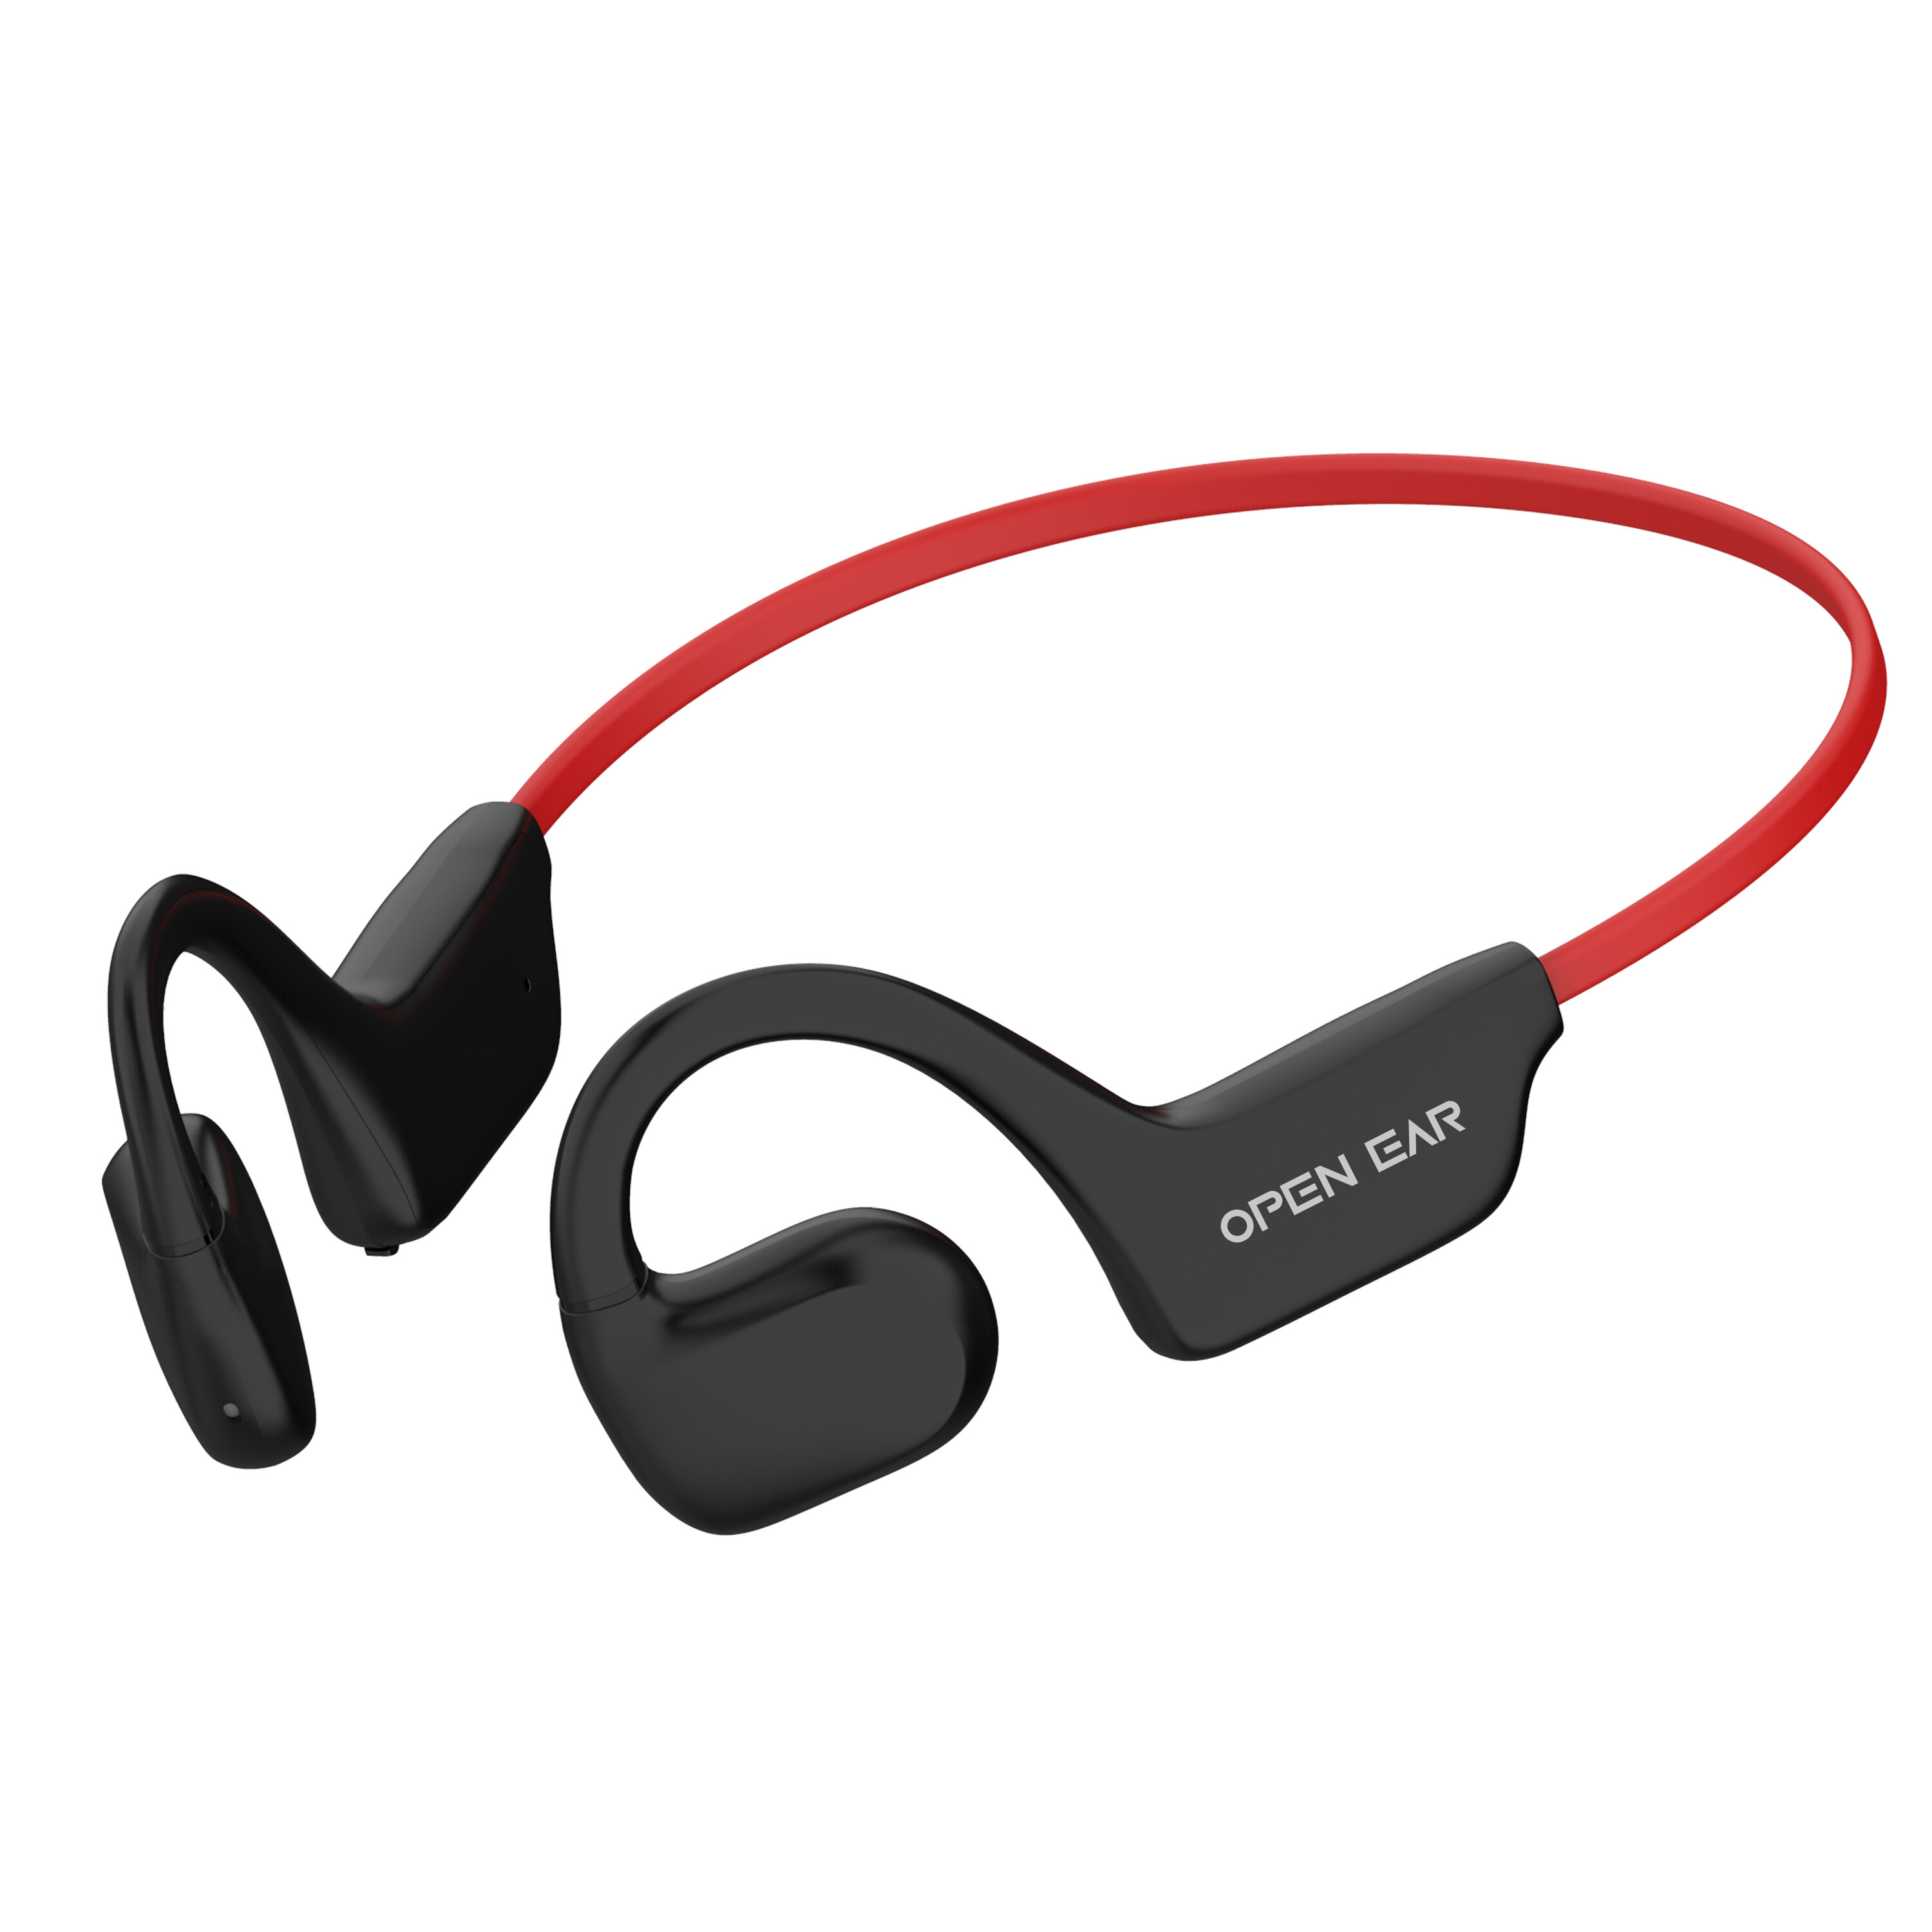 Openear Duo / Directional Audio Open Earヘッドフォンメーカー